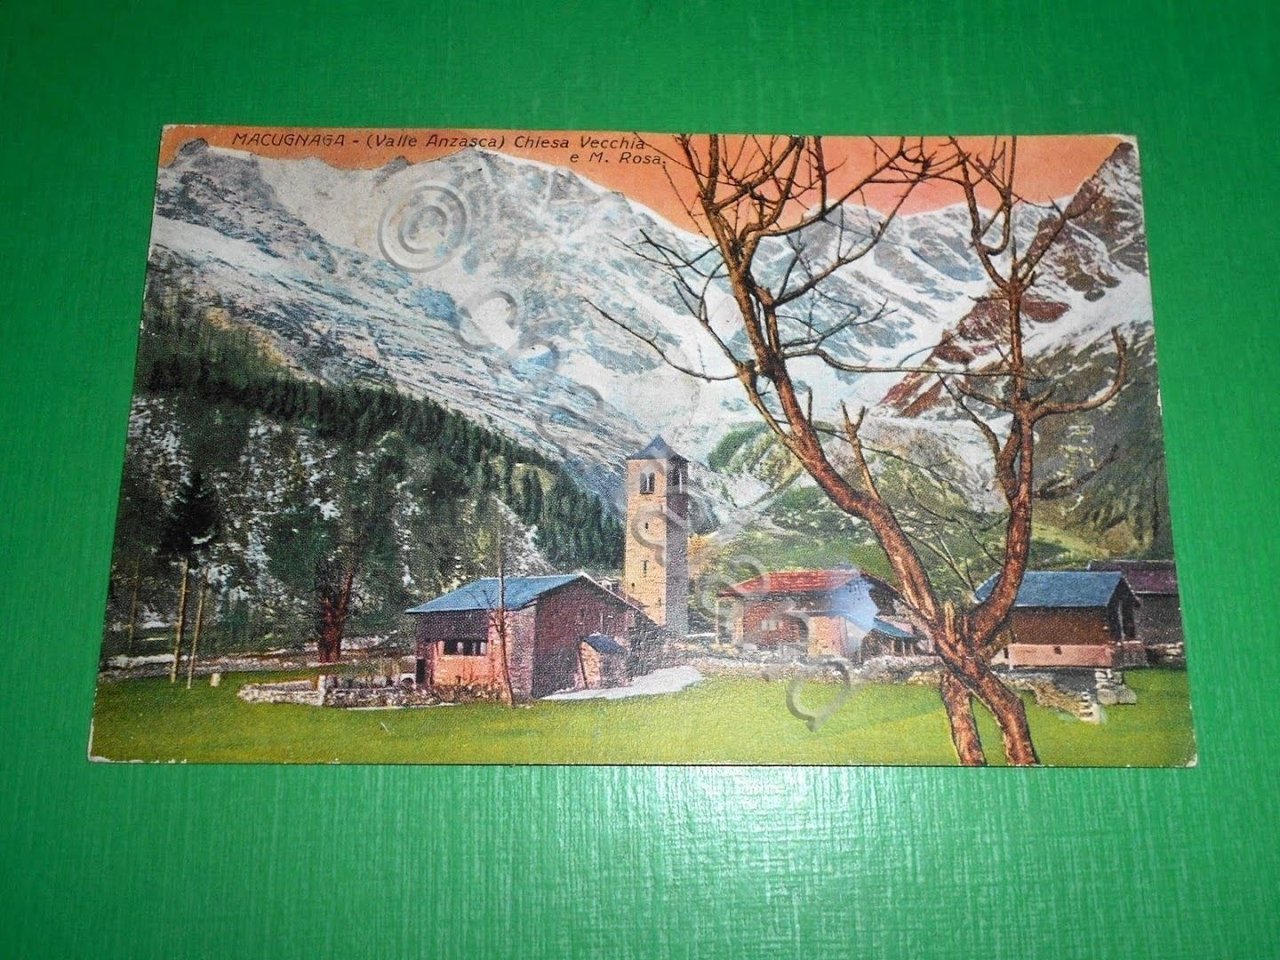 Cartolina Macugnaga ( Valle Anzasca ) - Chiesa Vecchia e …